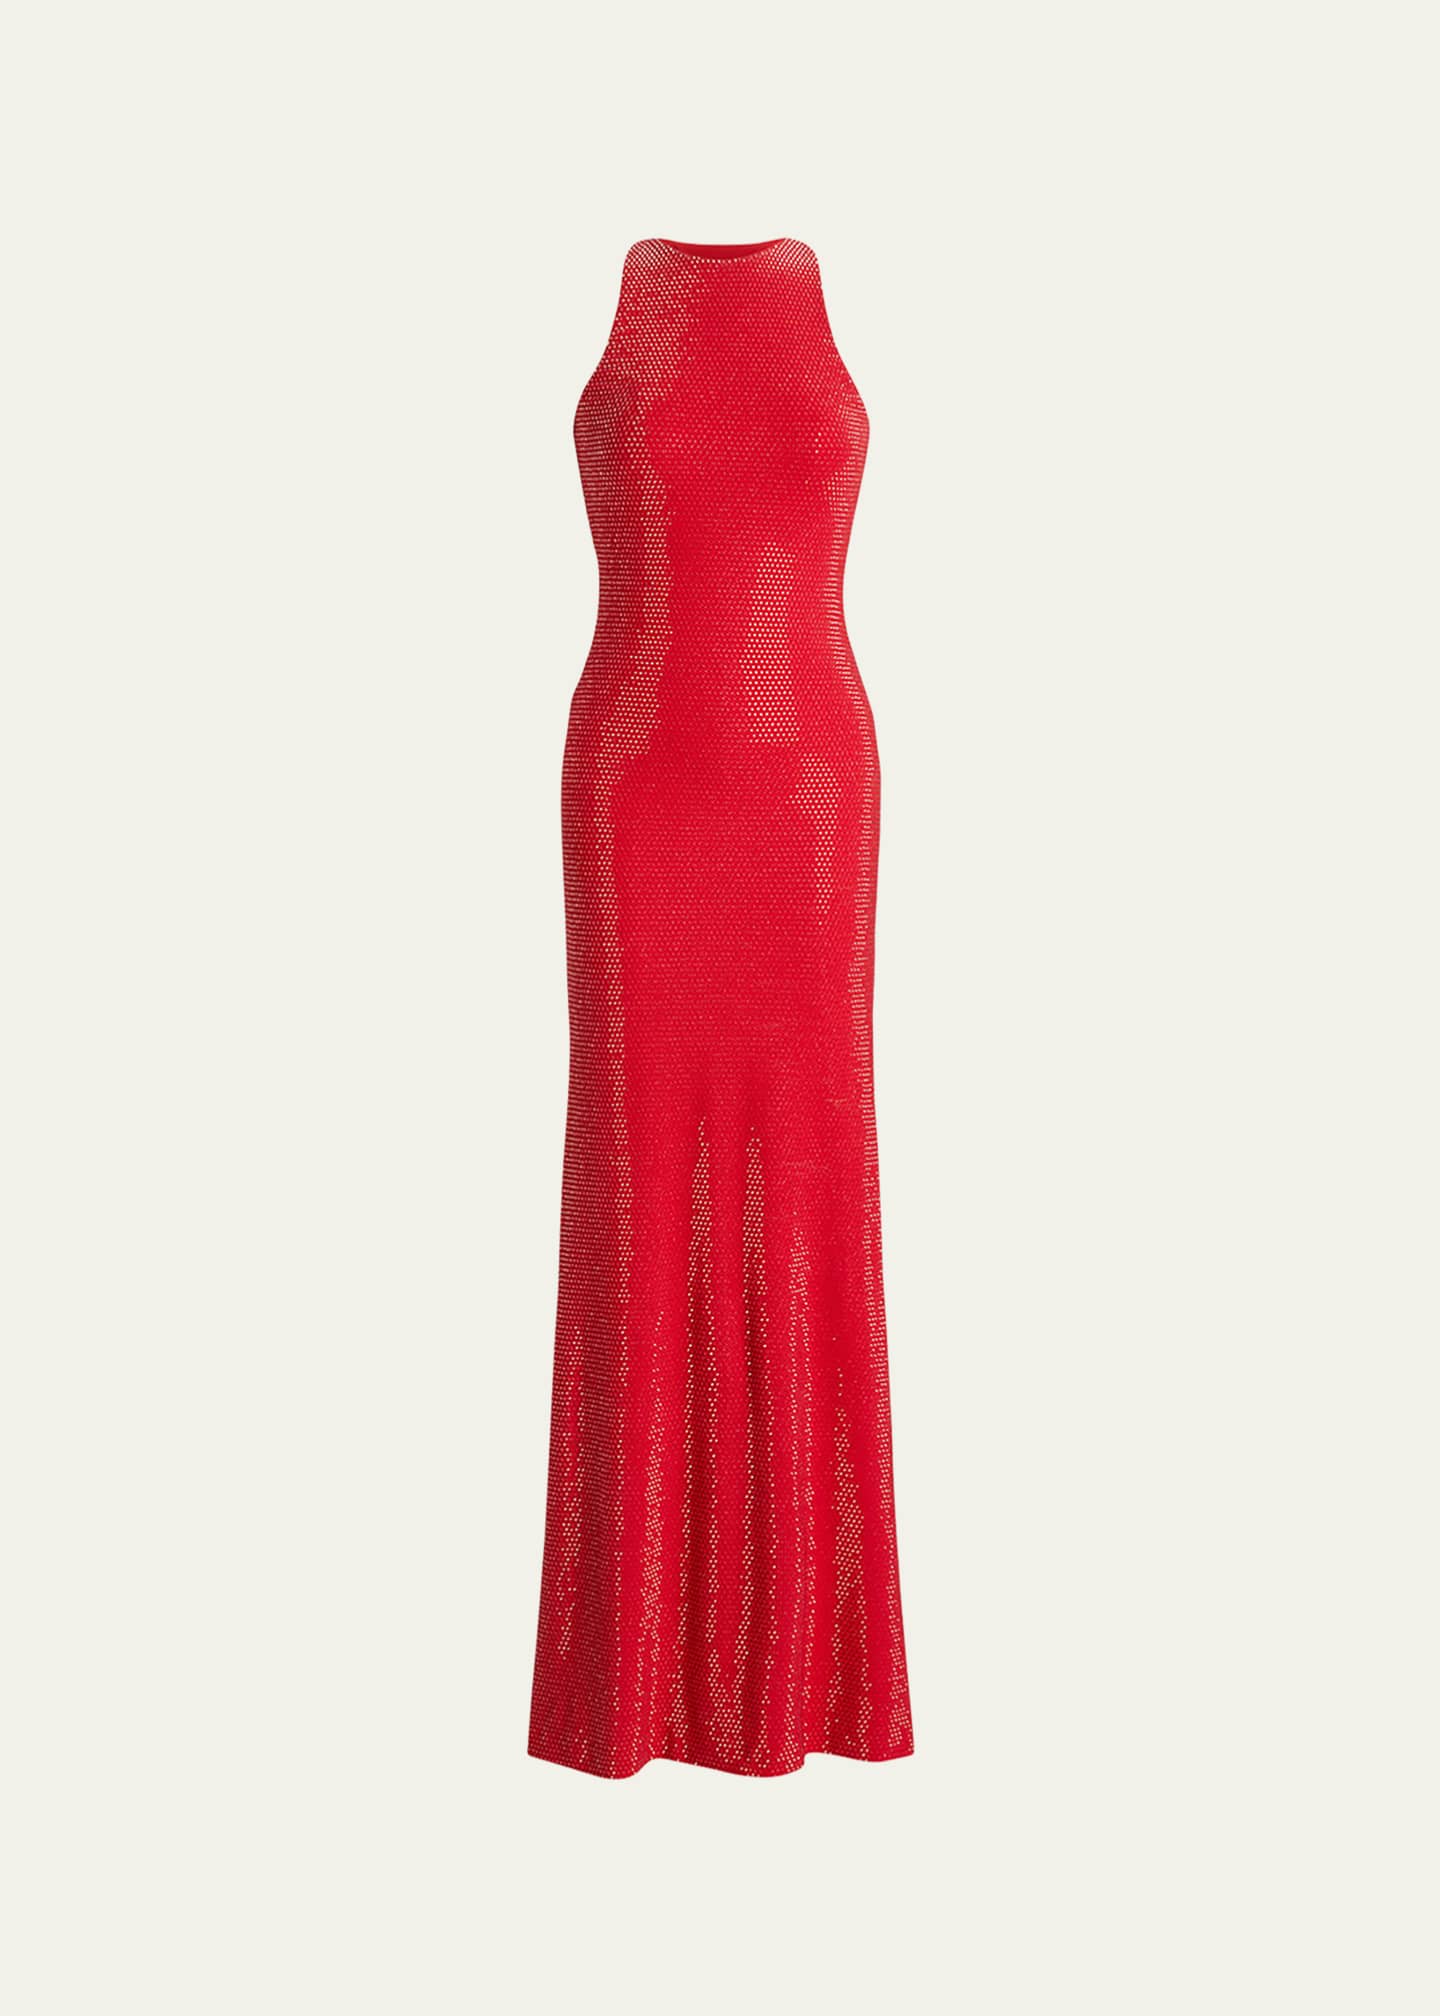 Ralph Lauren Claeton Embellished Dress - Bergdorf Goodman